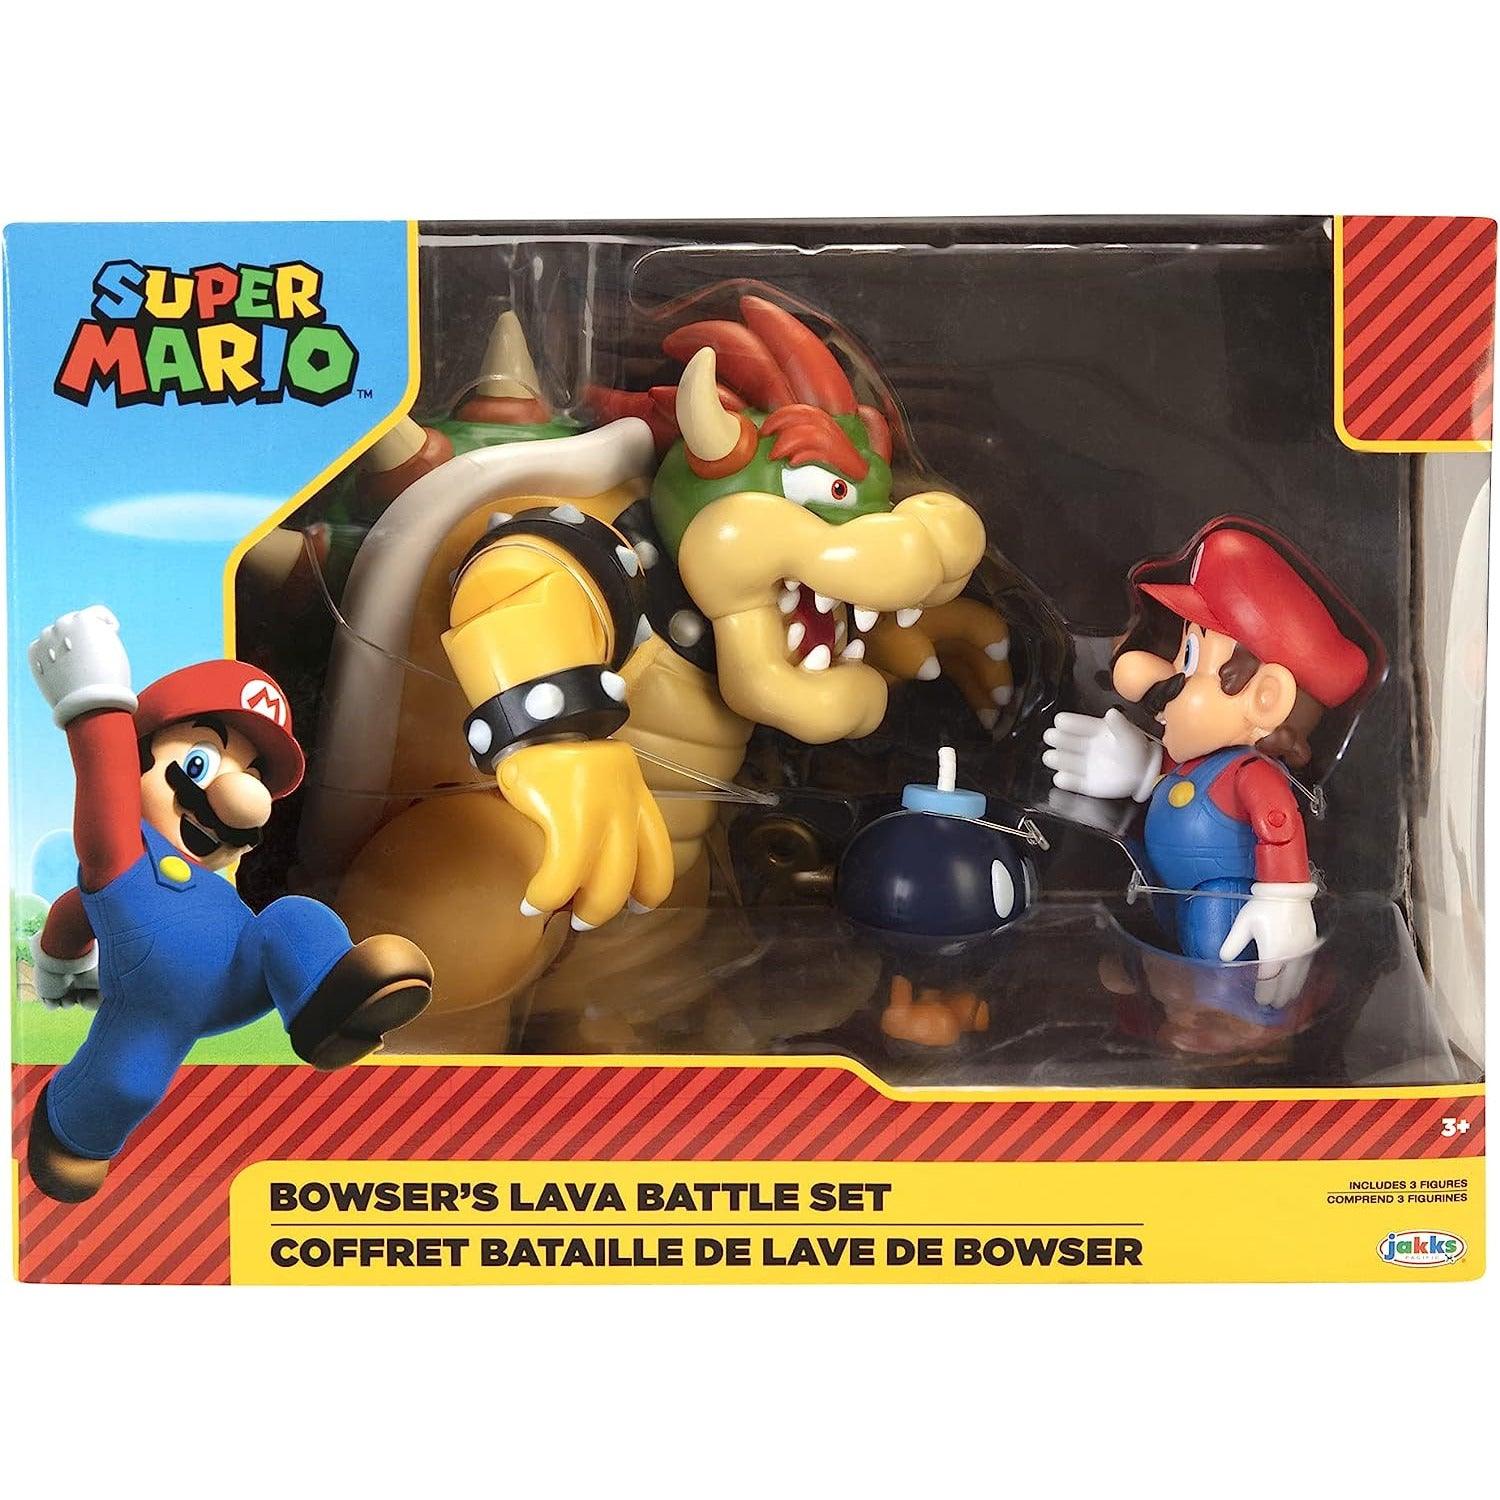 World of Nintendo Super Mario, Bowser, BOB - OMB , Figure Bowser Vs Mario Diorama Set - BumbleToys - 4+ Years, 5-7 Years, Boys, LEGO, OXE, Pre-Order, Super Mario